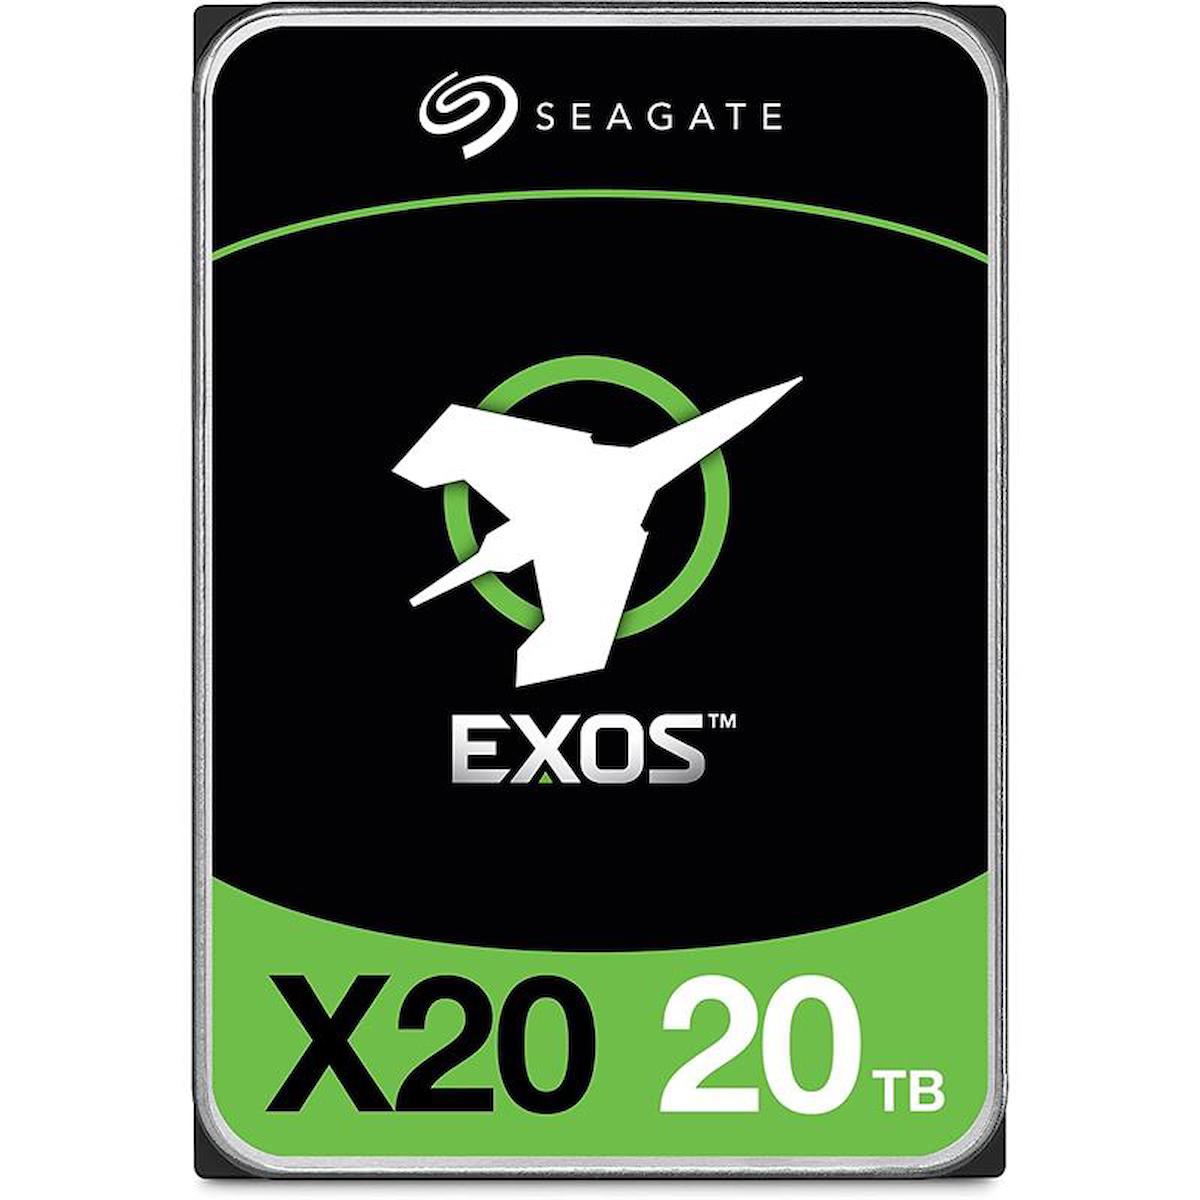 Seagate Exos ST20000NM007D 20 TB 3.5 inç 7200 RPM 256 MB SATA 3.0 PC Harddisk